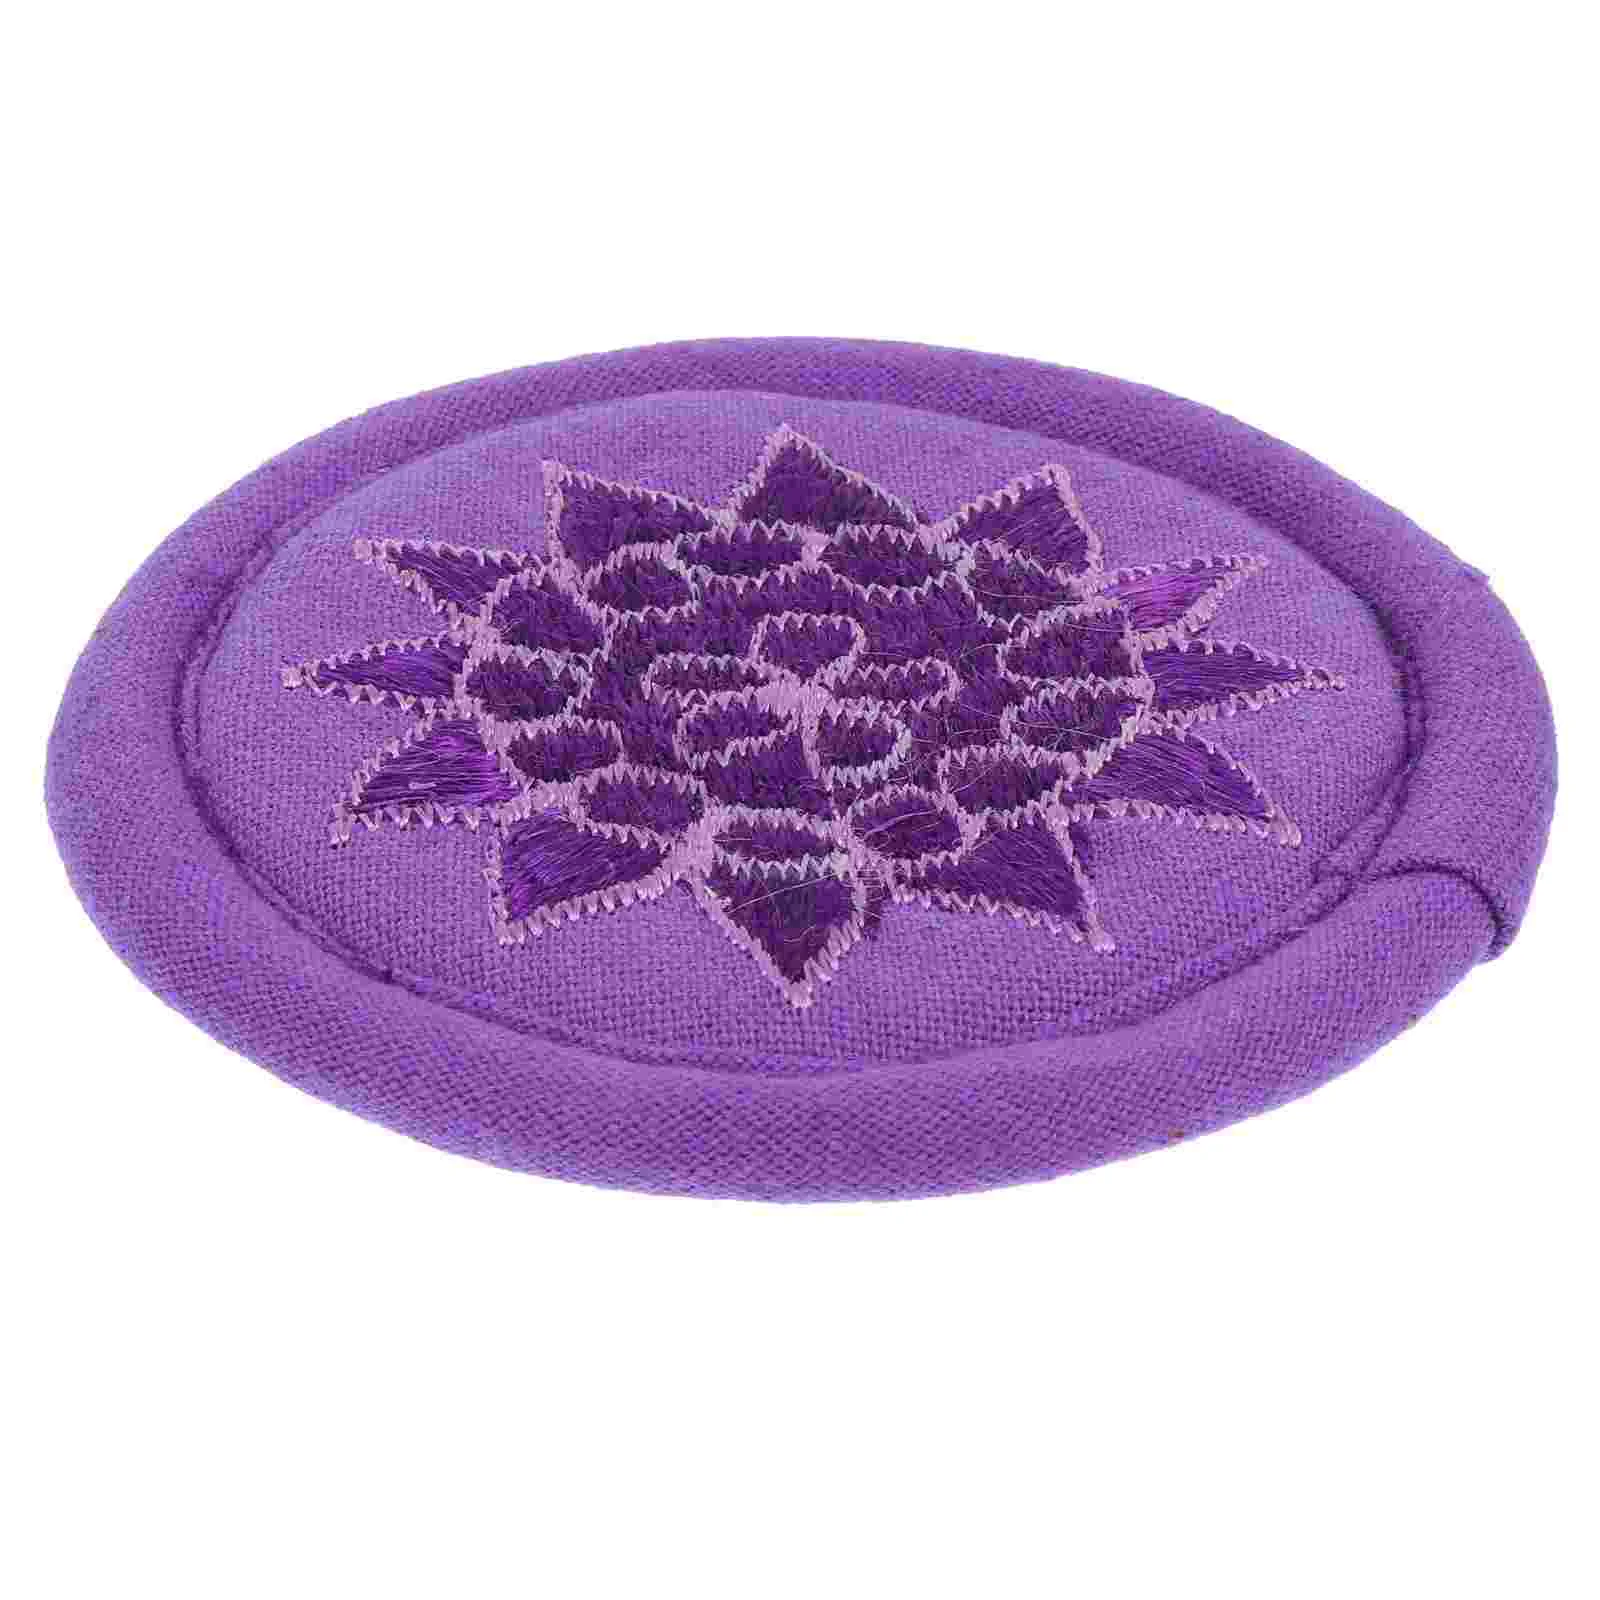 

Vintage Decor Singing Bowl Cushion Meditation Sound Mat Tibetan Handmade Pad Purple Healing Music Instrument Accessory